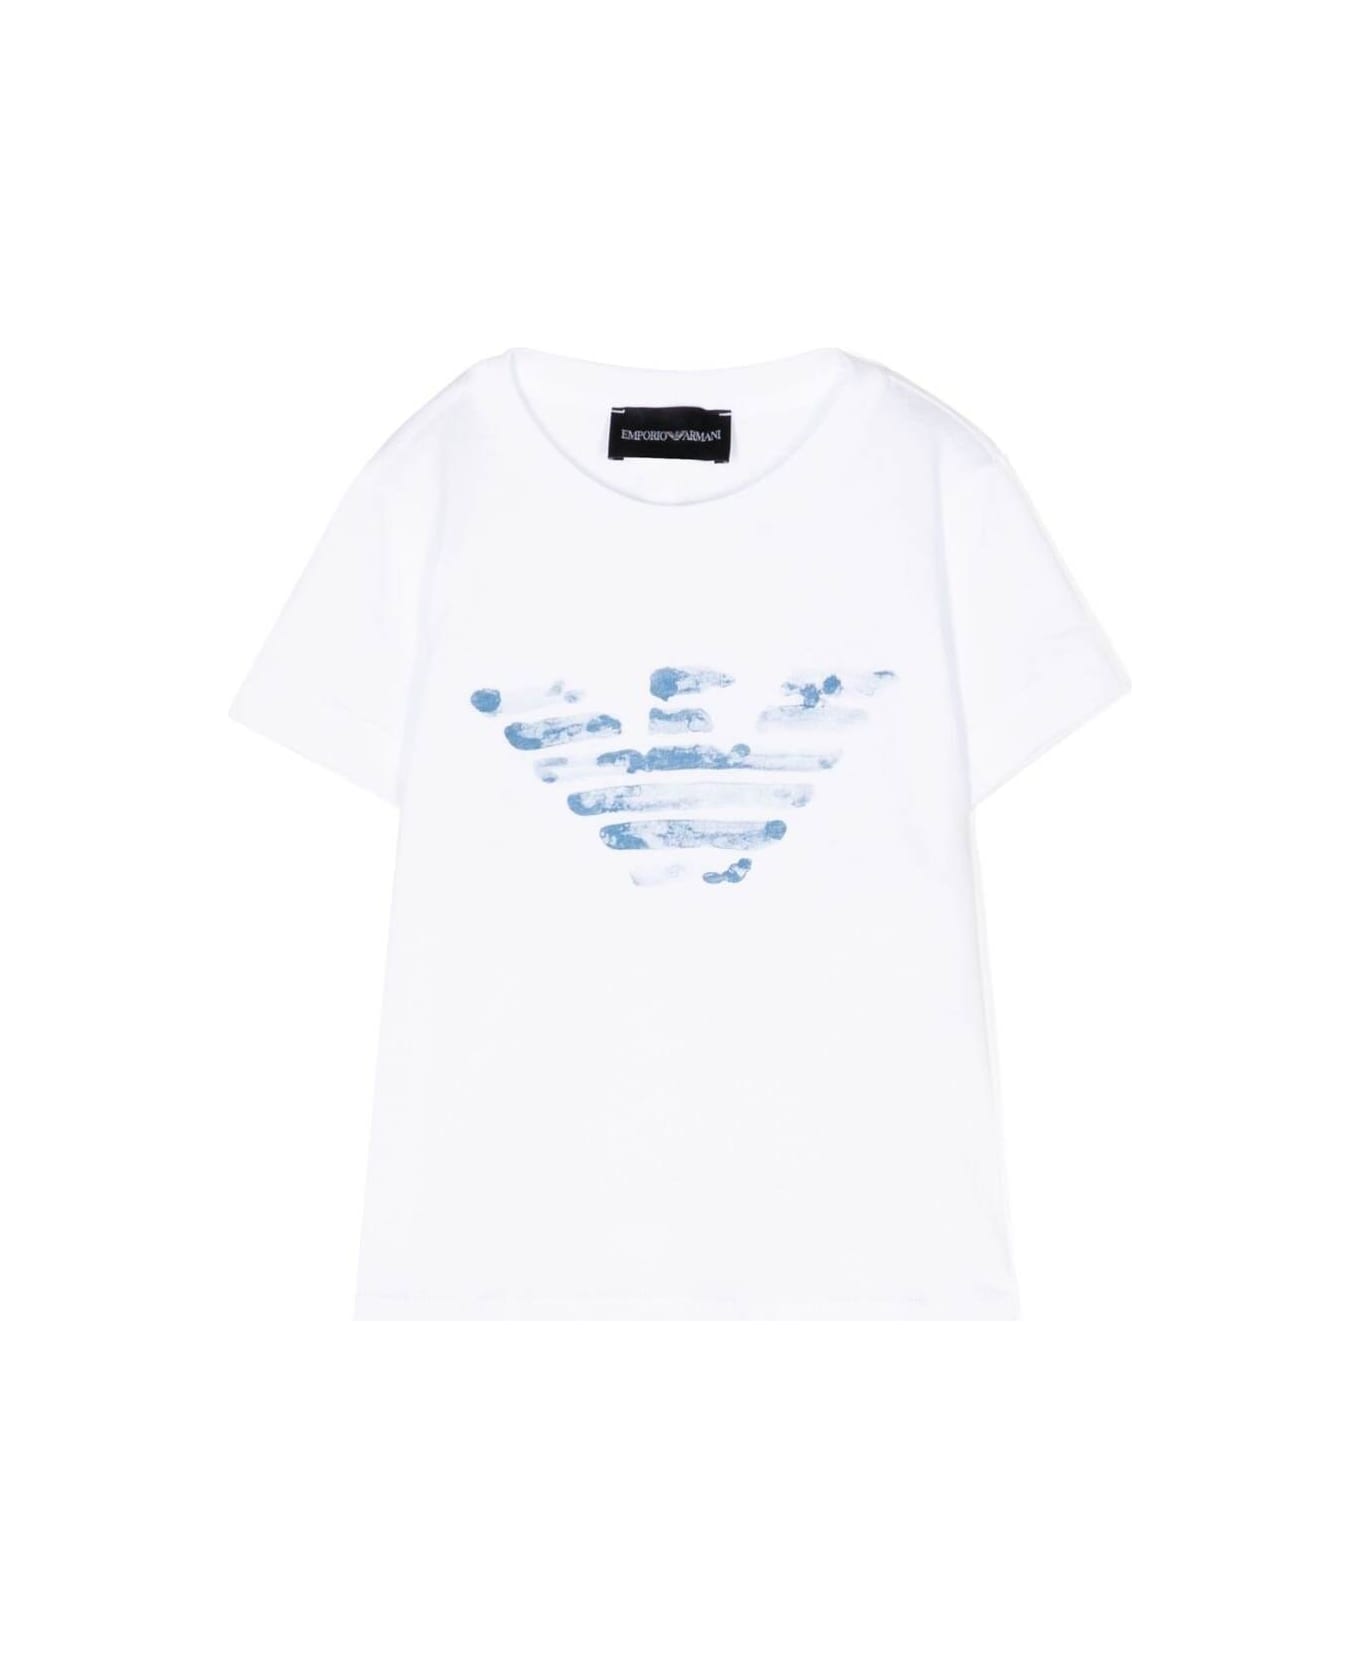 Emporio Armani 2pack White T-shirt With Emporio Print In Cotton Girl - White